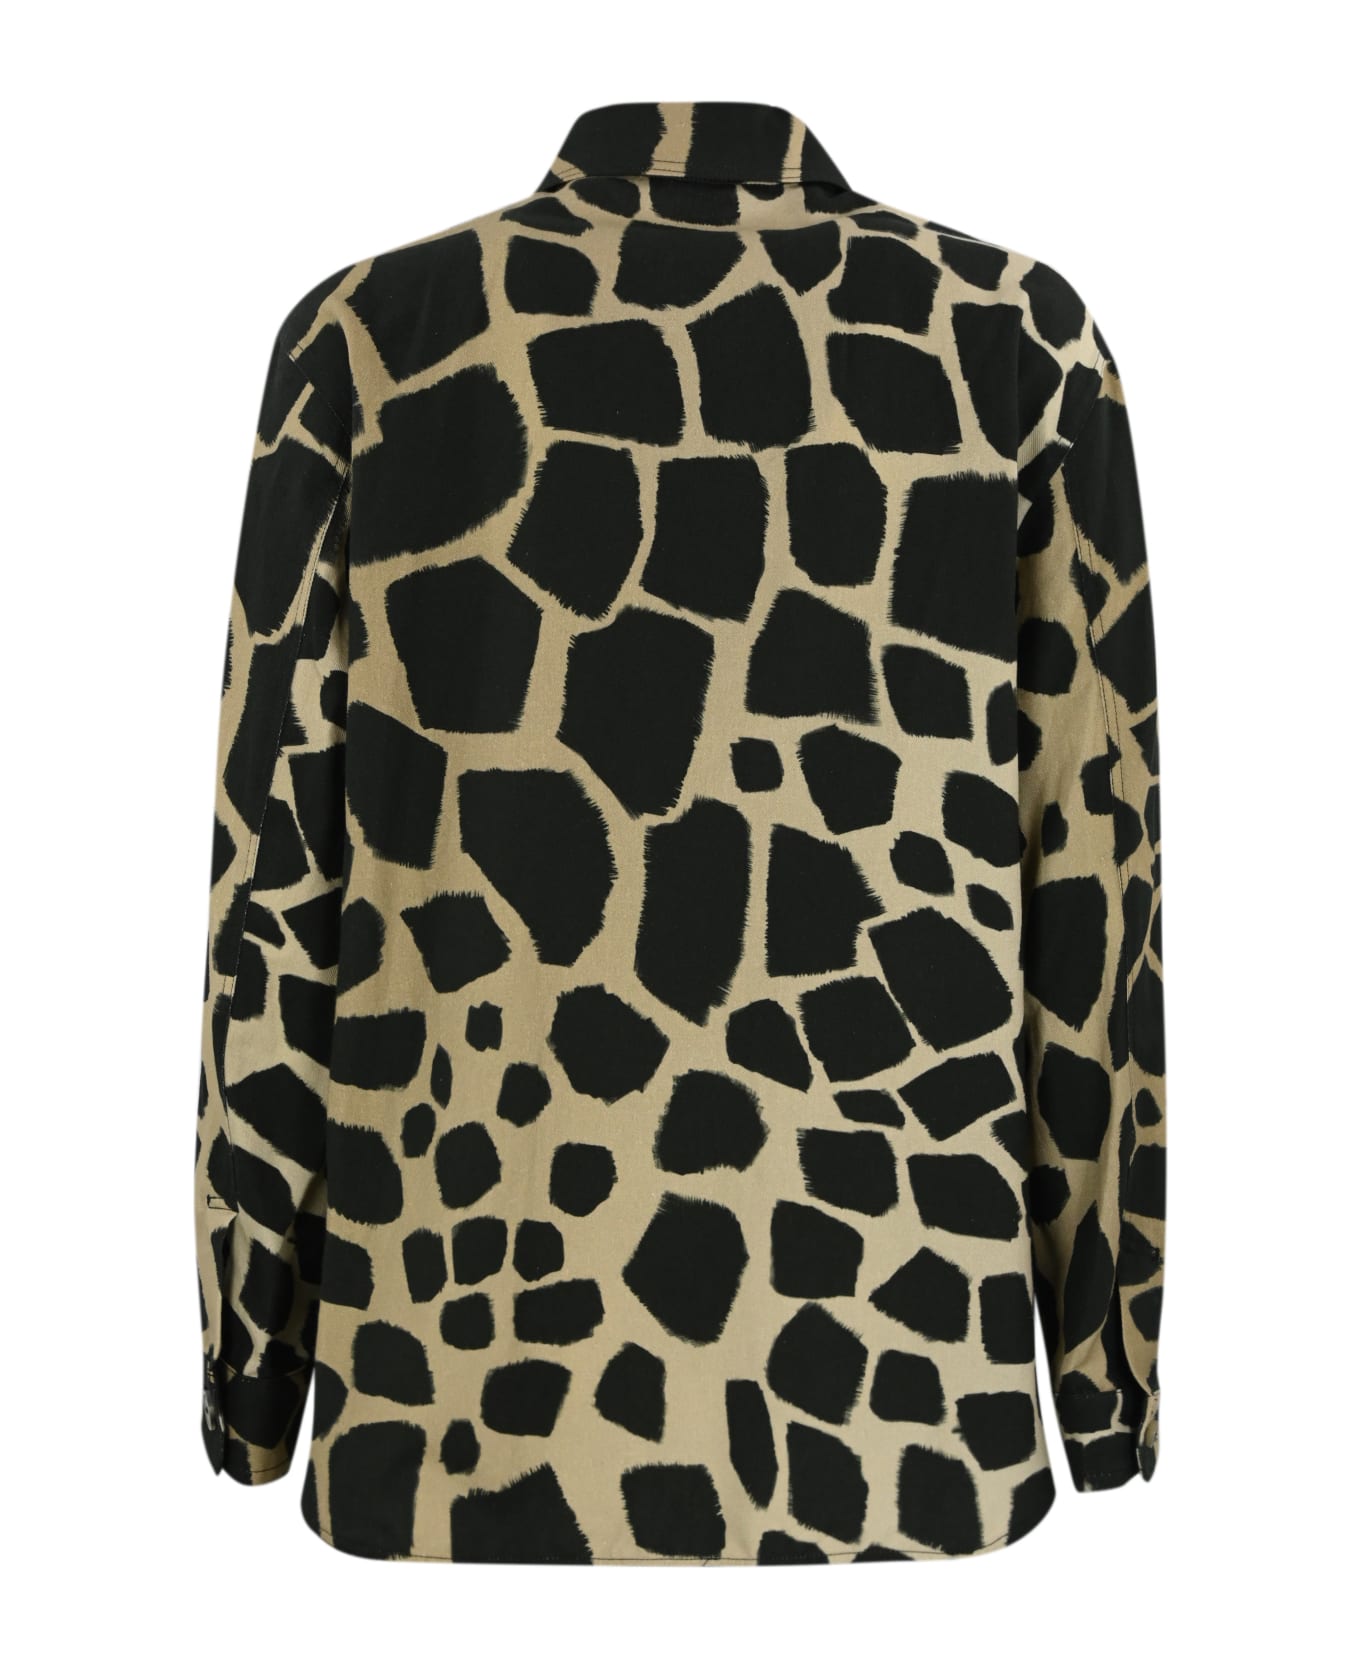 Max Mara Studio 'tesoro' Shirt In Cotton And Linen Blend - Giraffa